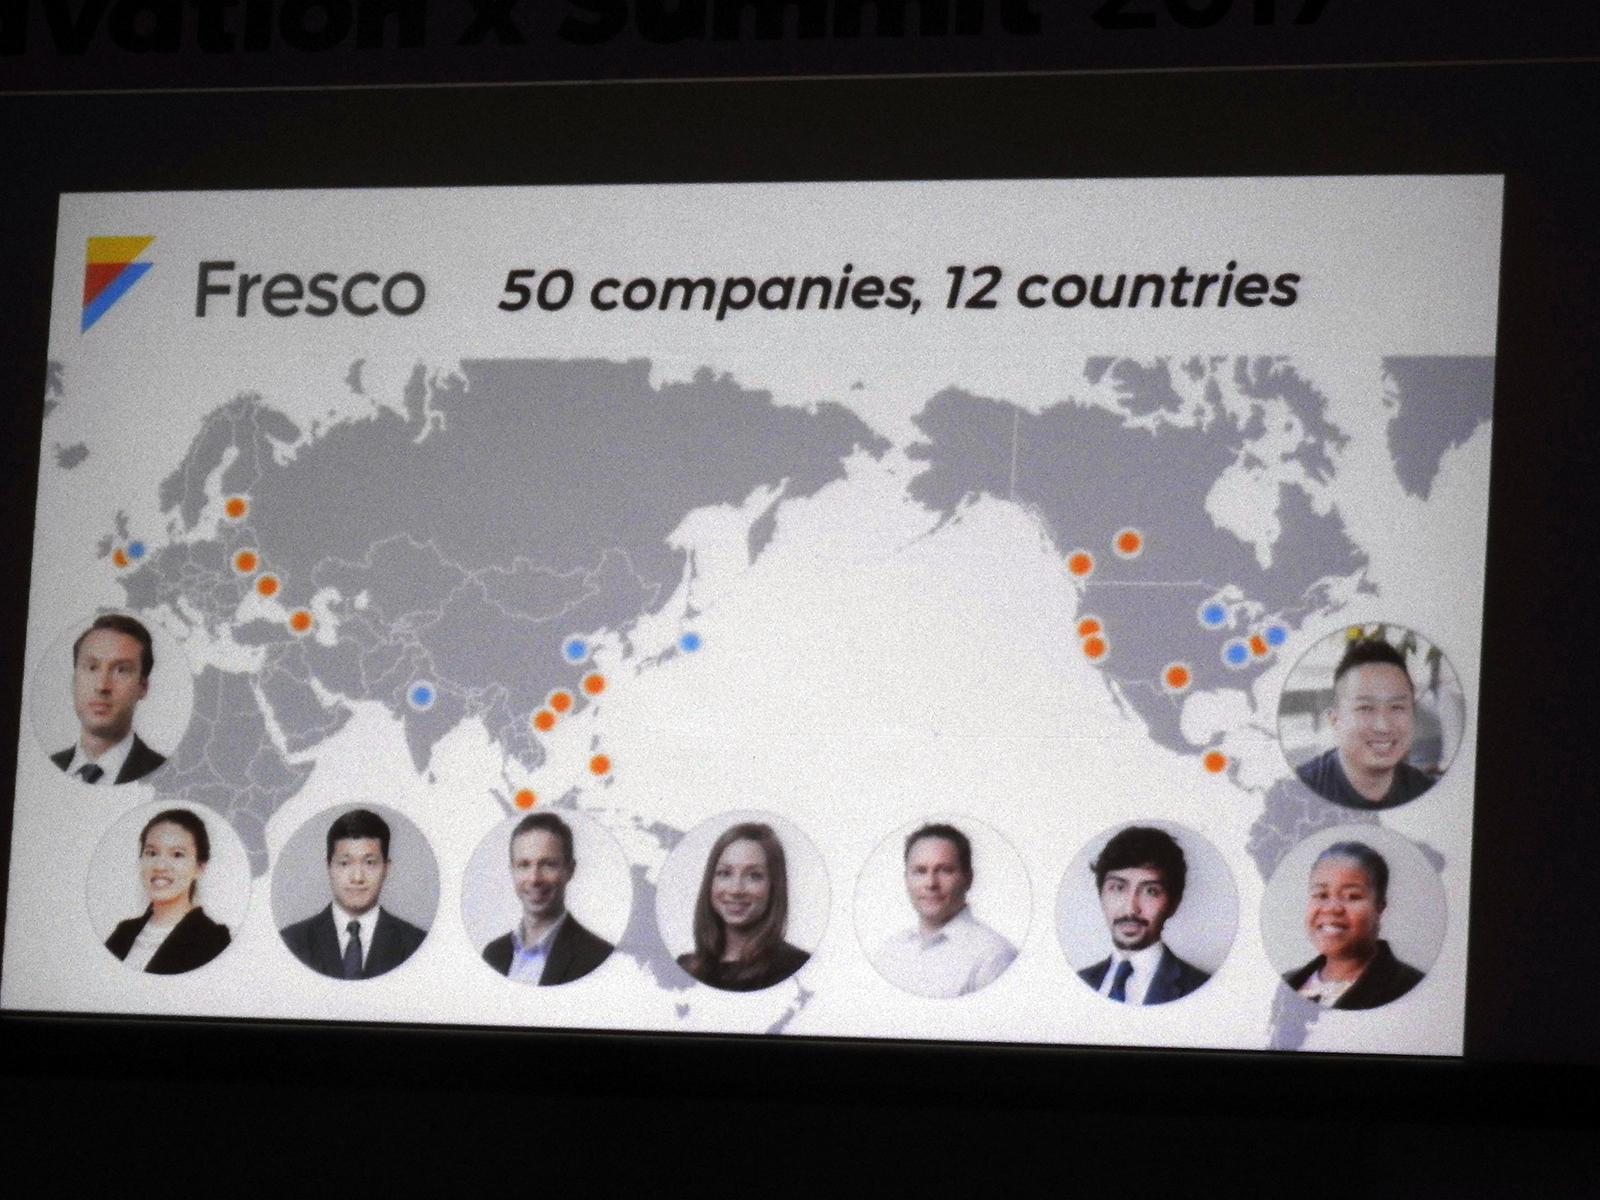 Frescoは、12カ国の合計50社に投資をしている